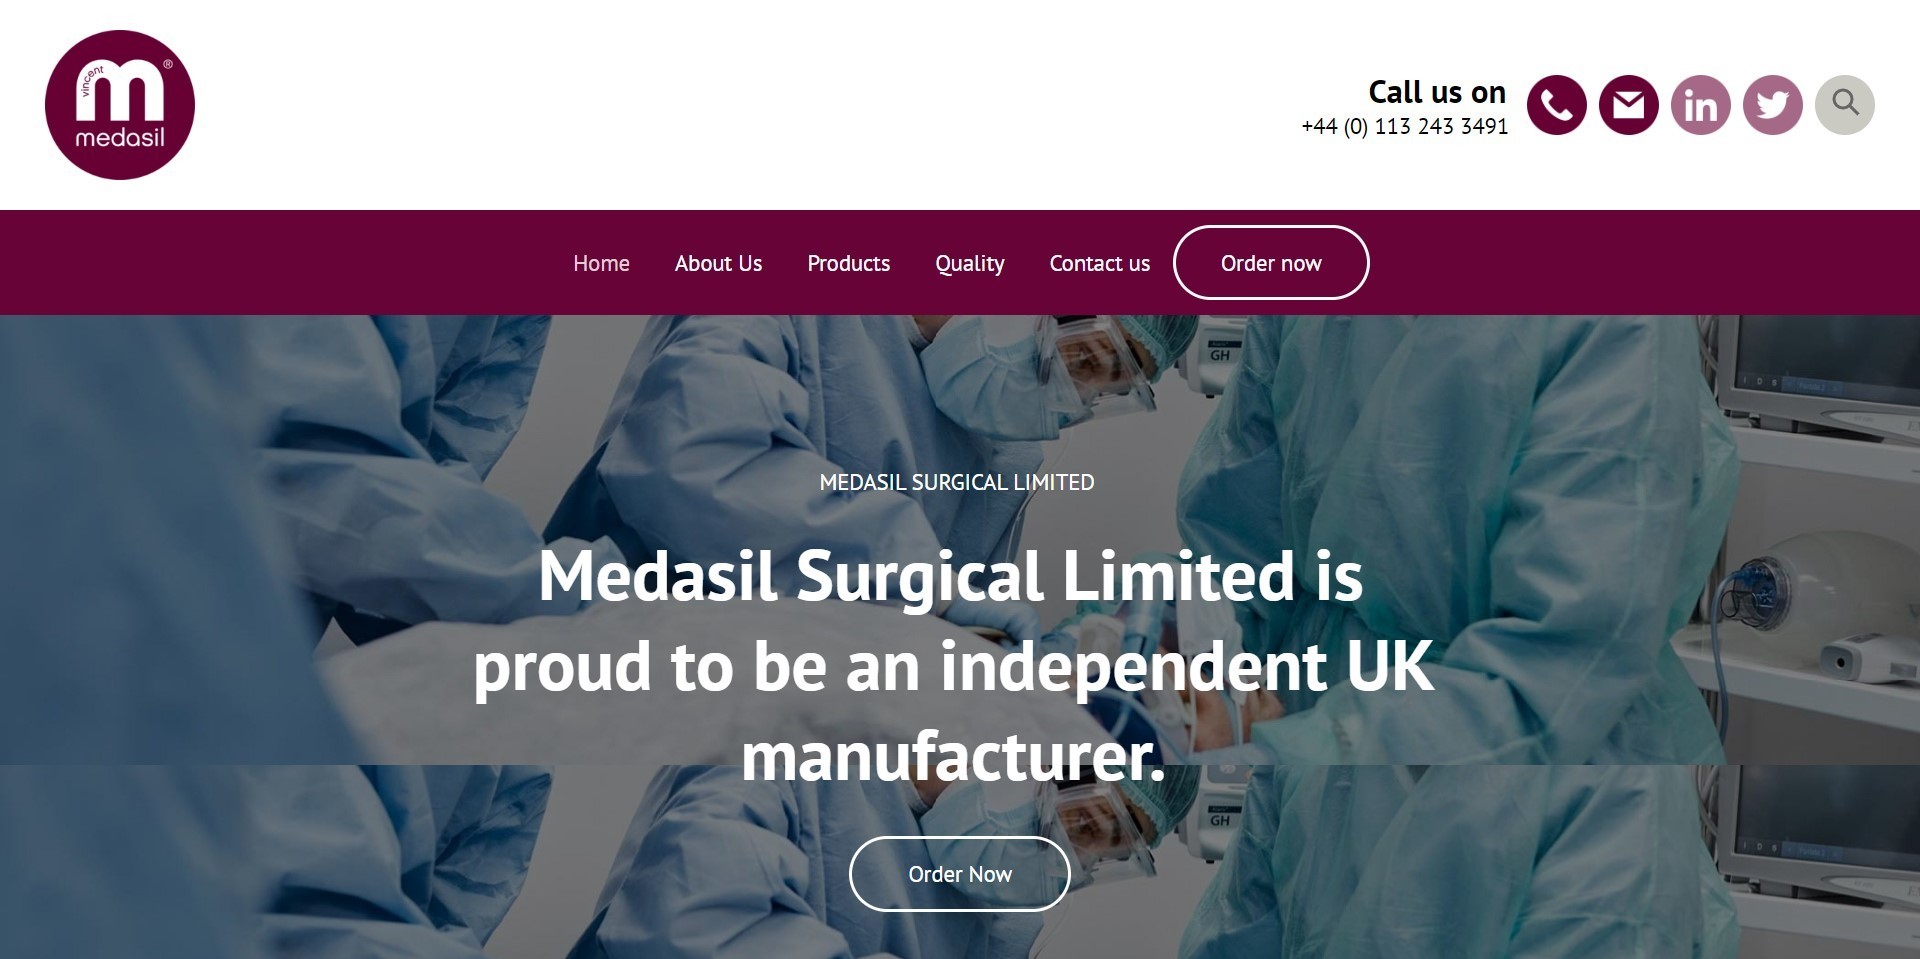 The new Medasil, designed by it'seeze, website shown on desktop